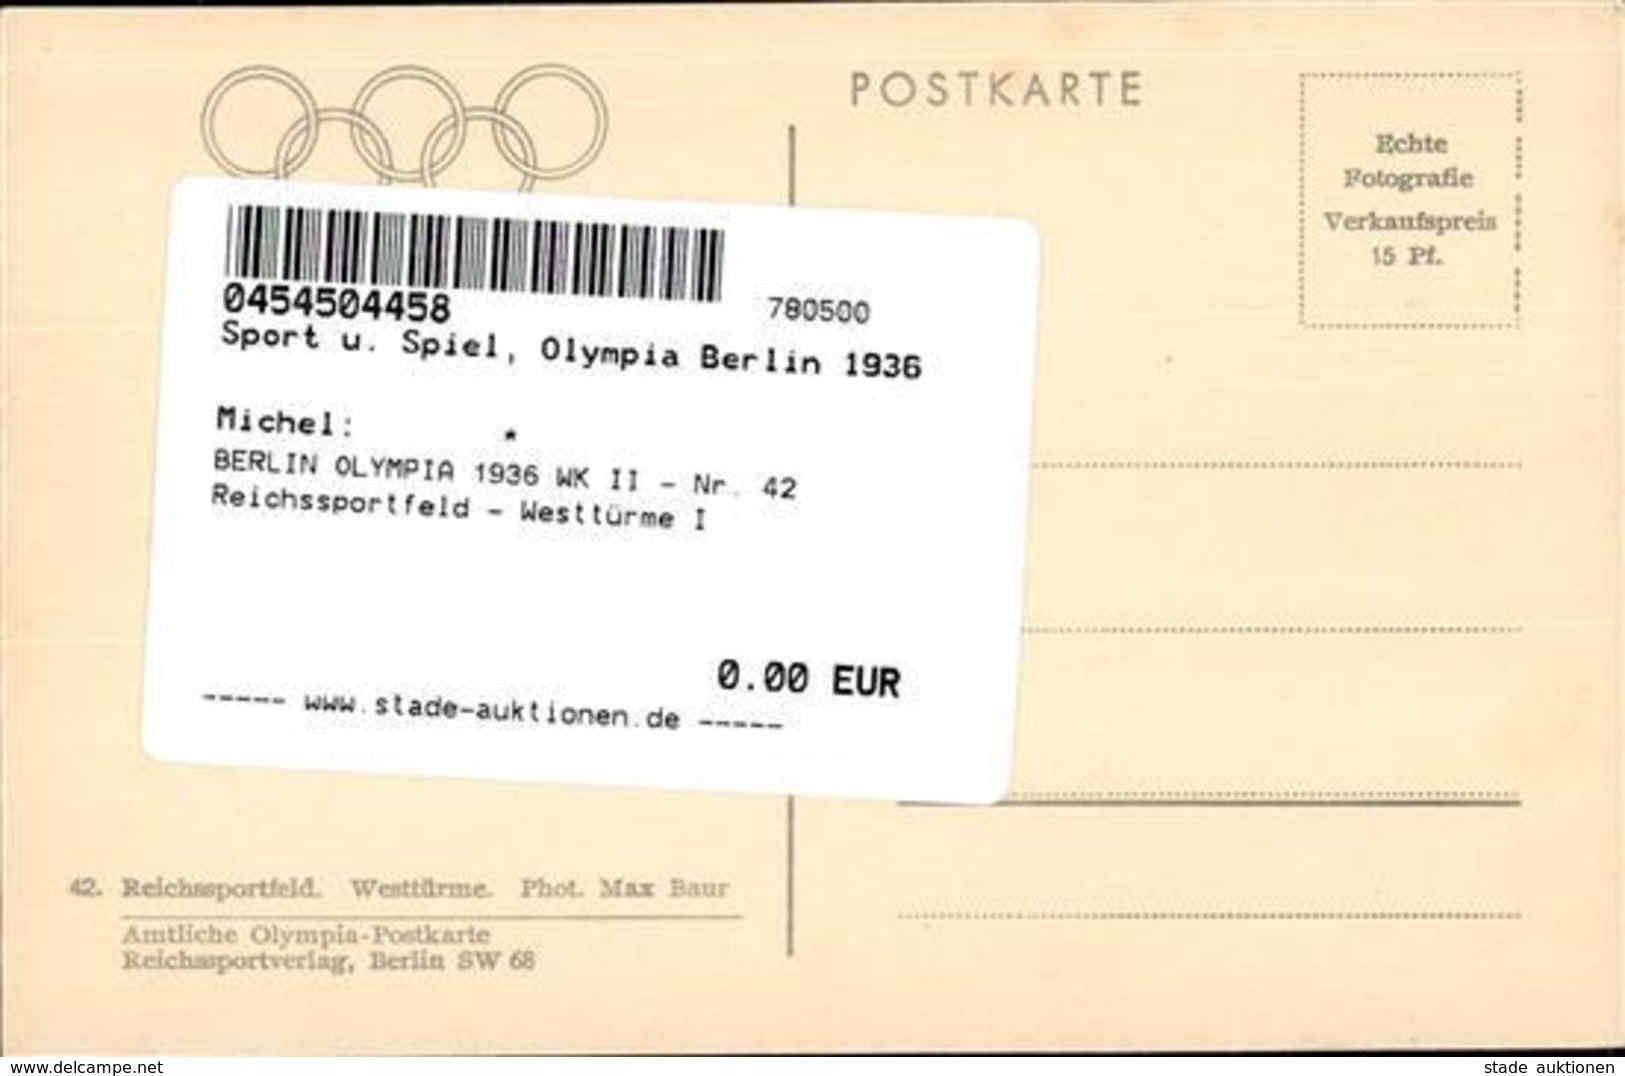 BERLIN OLYMPIA 1936 WK II - Nr. 42 Reichssportfeld - Westtürme I - Olympic Games